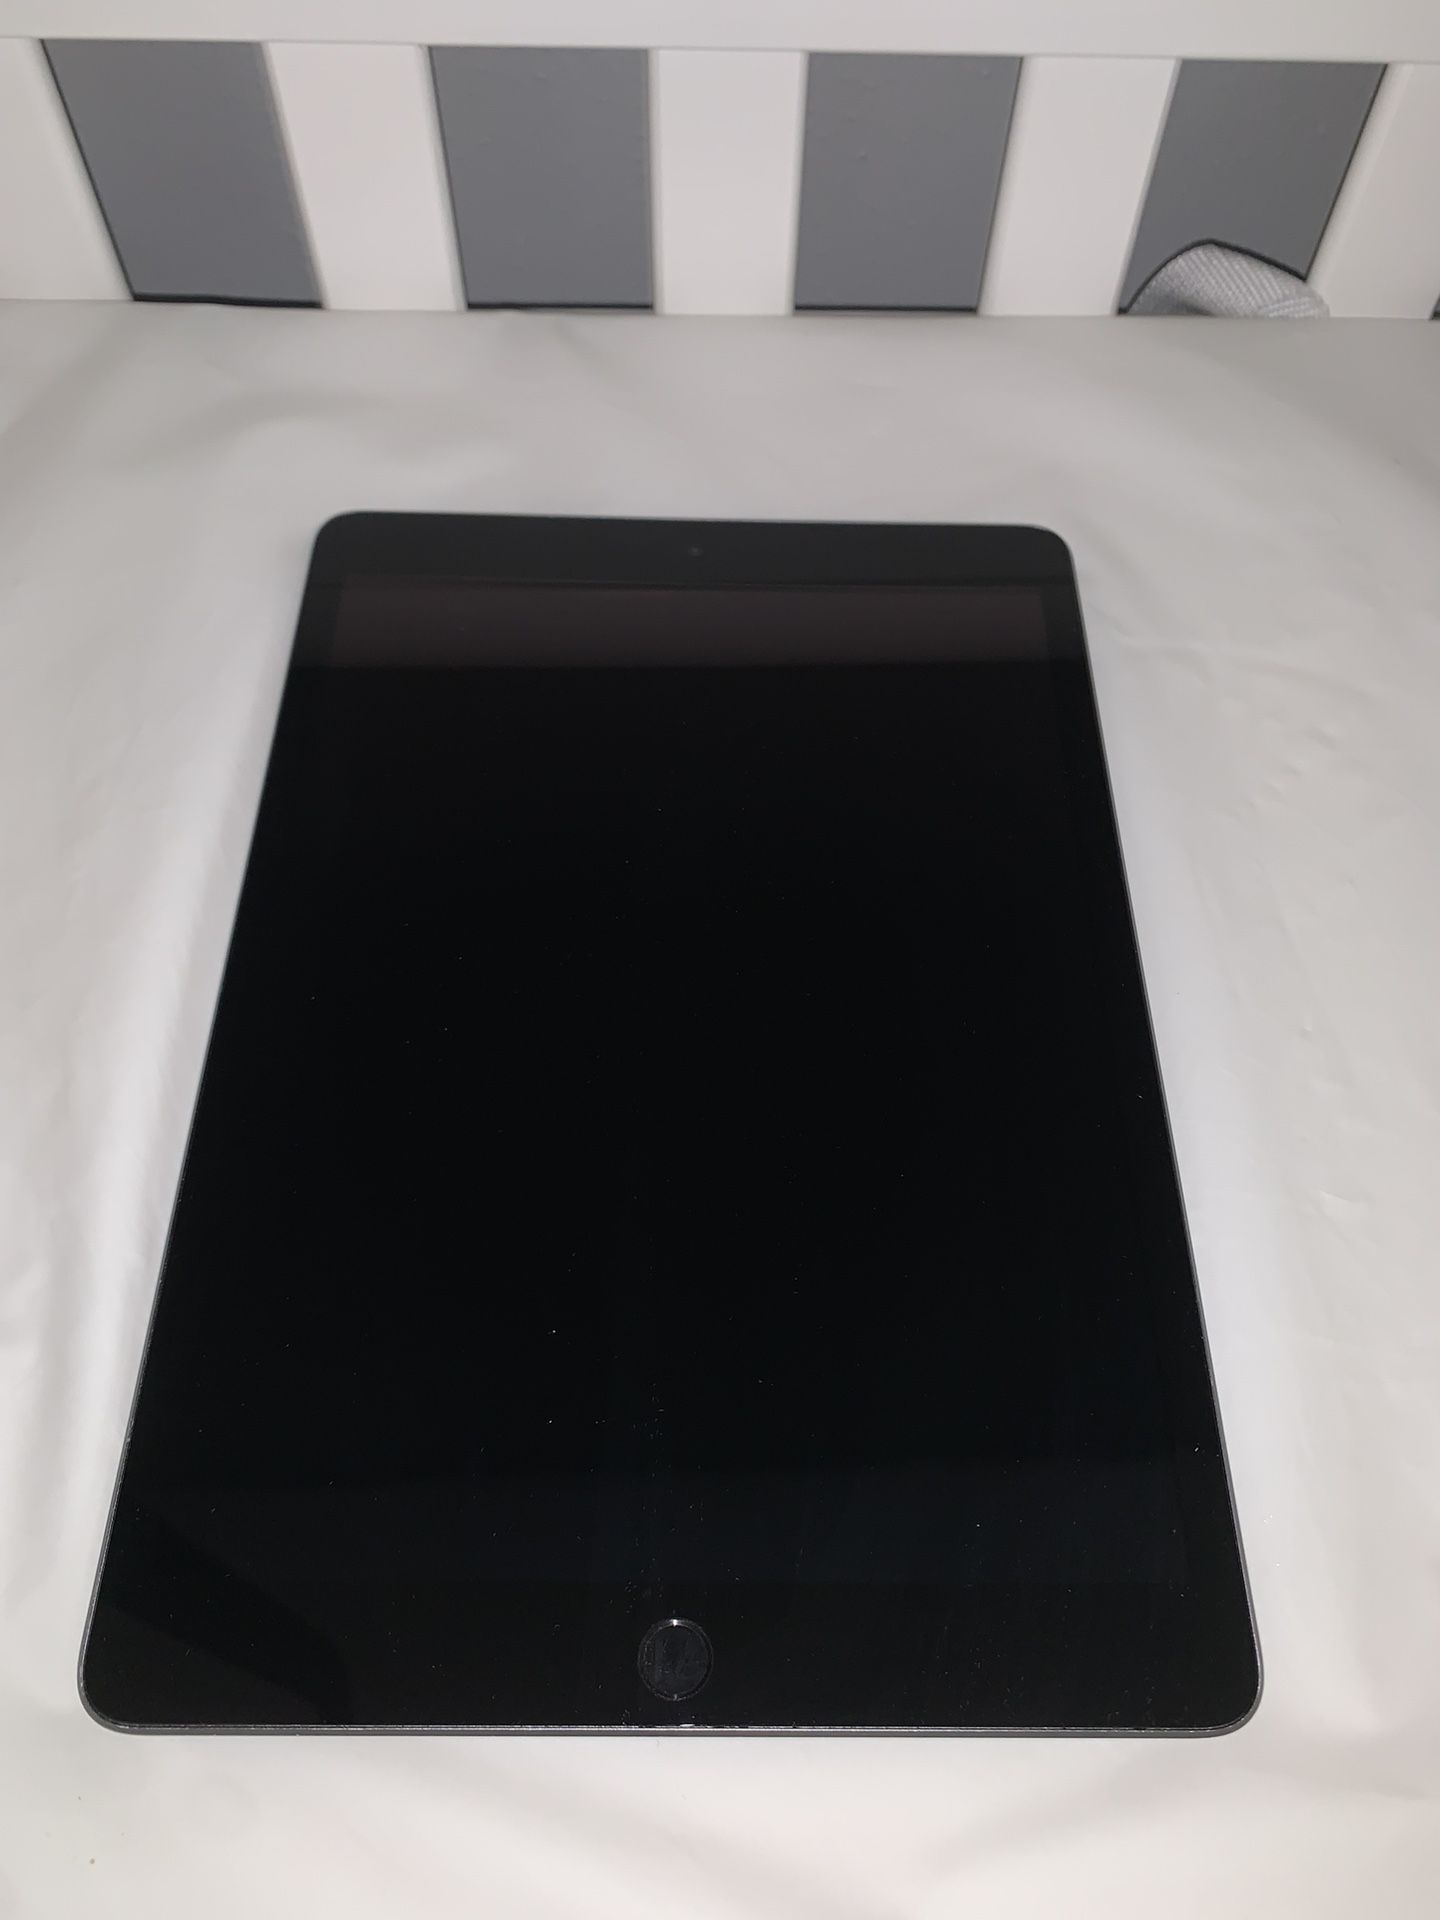 2021 Apple 10.2-inch iPad Wi-Fi 256GB - Space Gray (9th Generation)